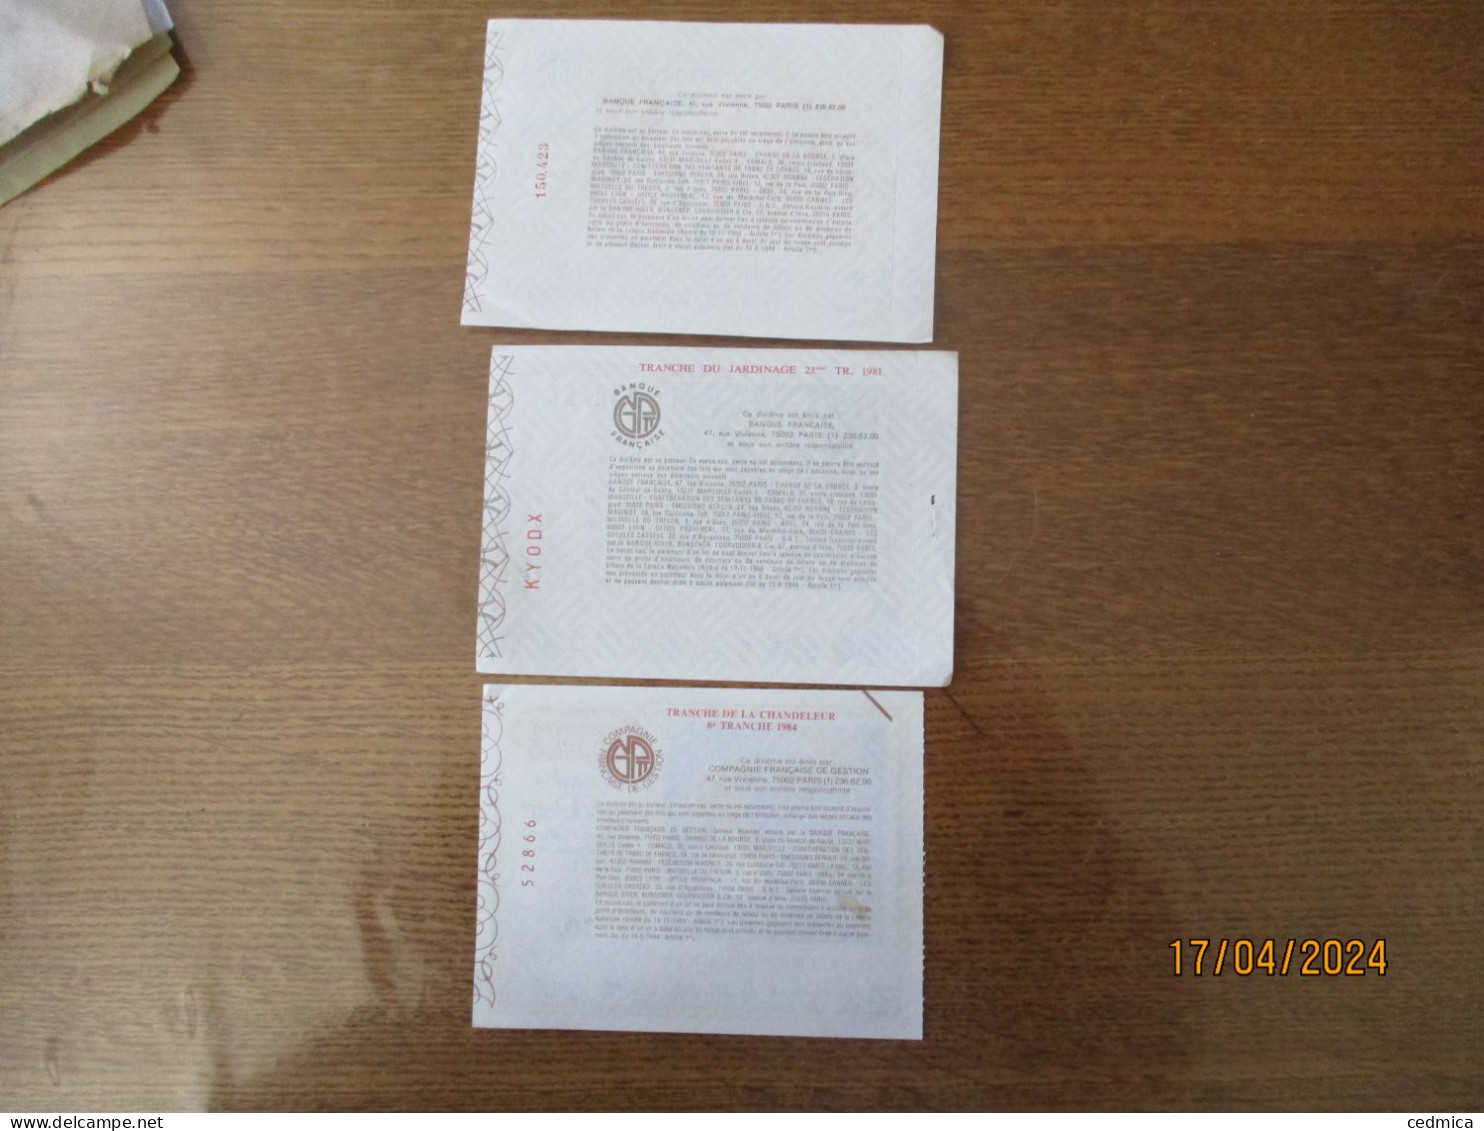 3 BILLETS DE LOTERIE TRANCHE DE L'ARLEQUIN OCTOBRE 1980,DU JARDINAGE 1er AVRIL 1981,DE LA CHANDELEUR 1er FEVRIER 1984 - Lottery Tickets